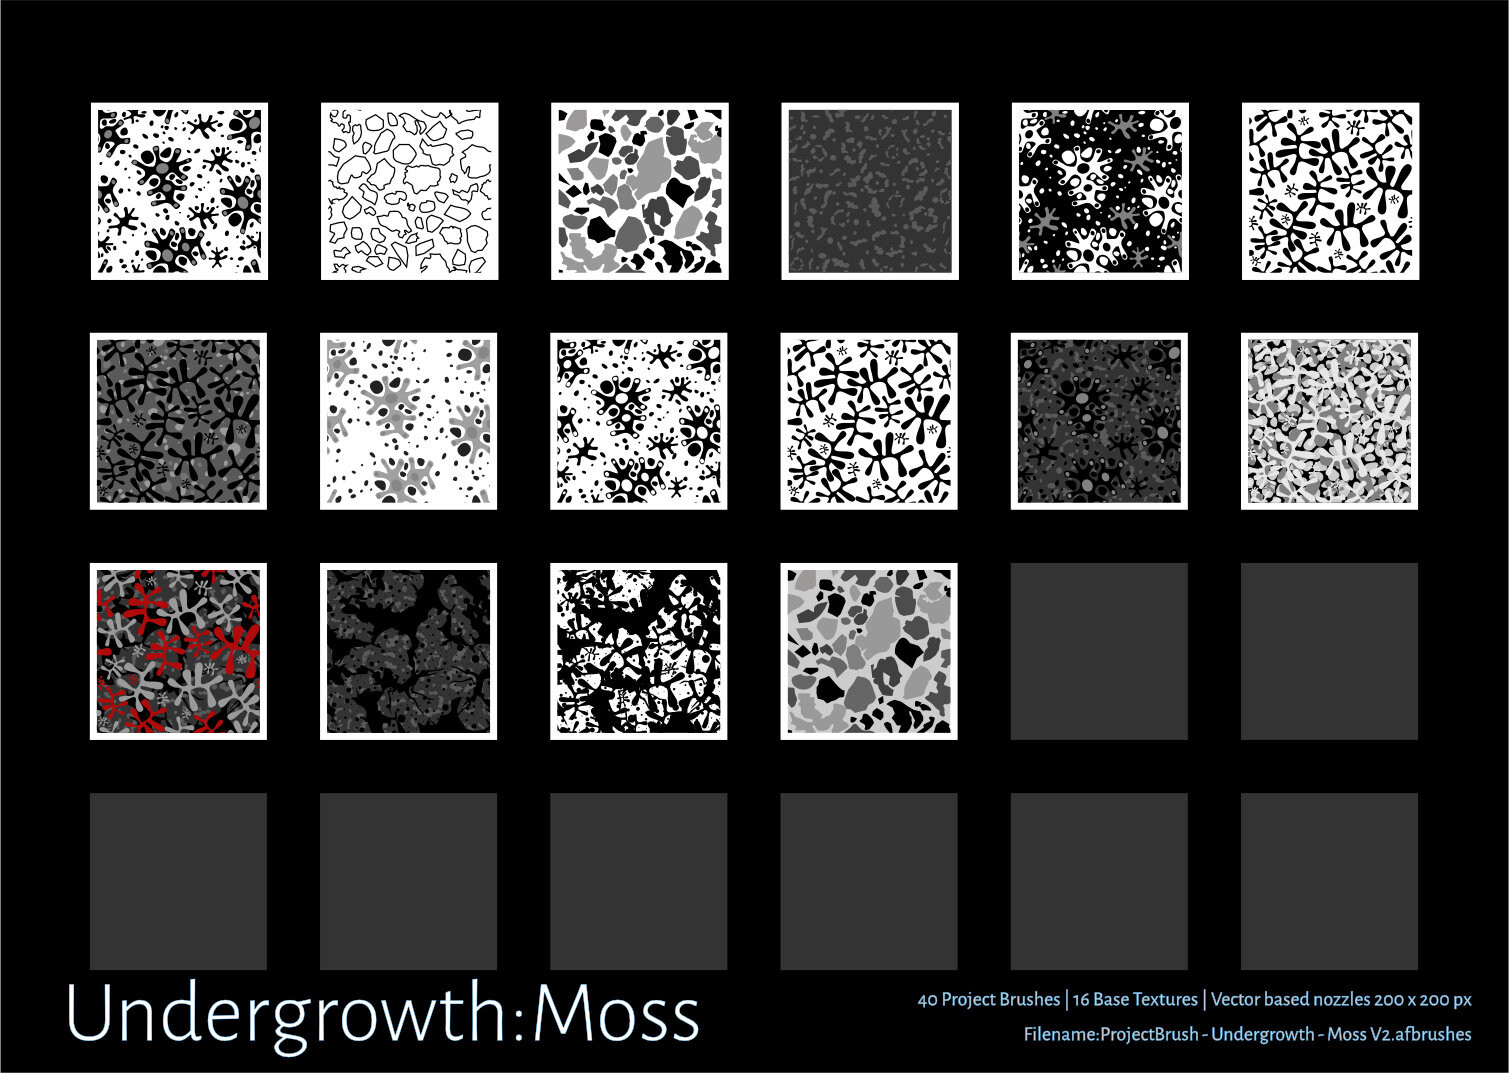 Undergrowth Moss
16 base textures